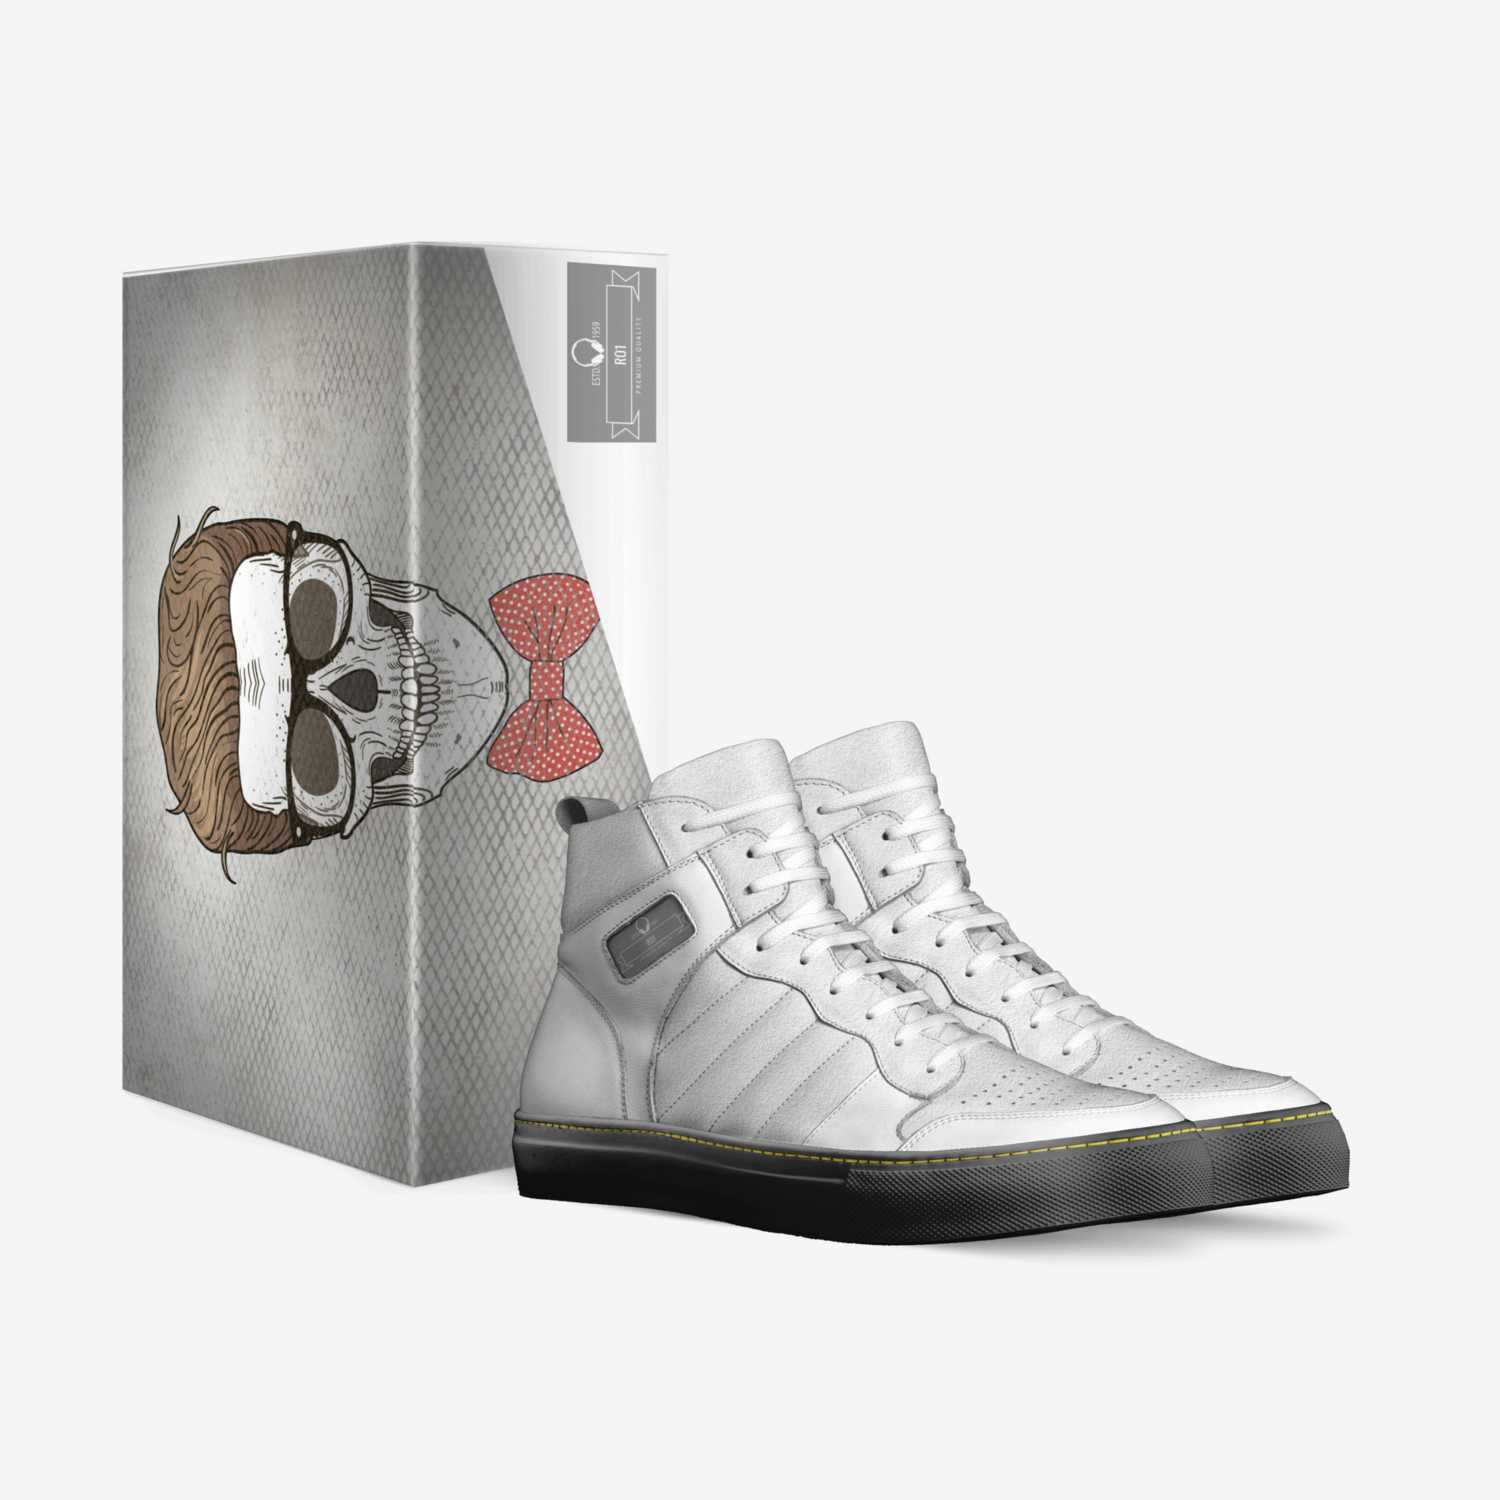 RO1 custom made in Italy shoes by Dario Romero | Box view